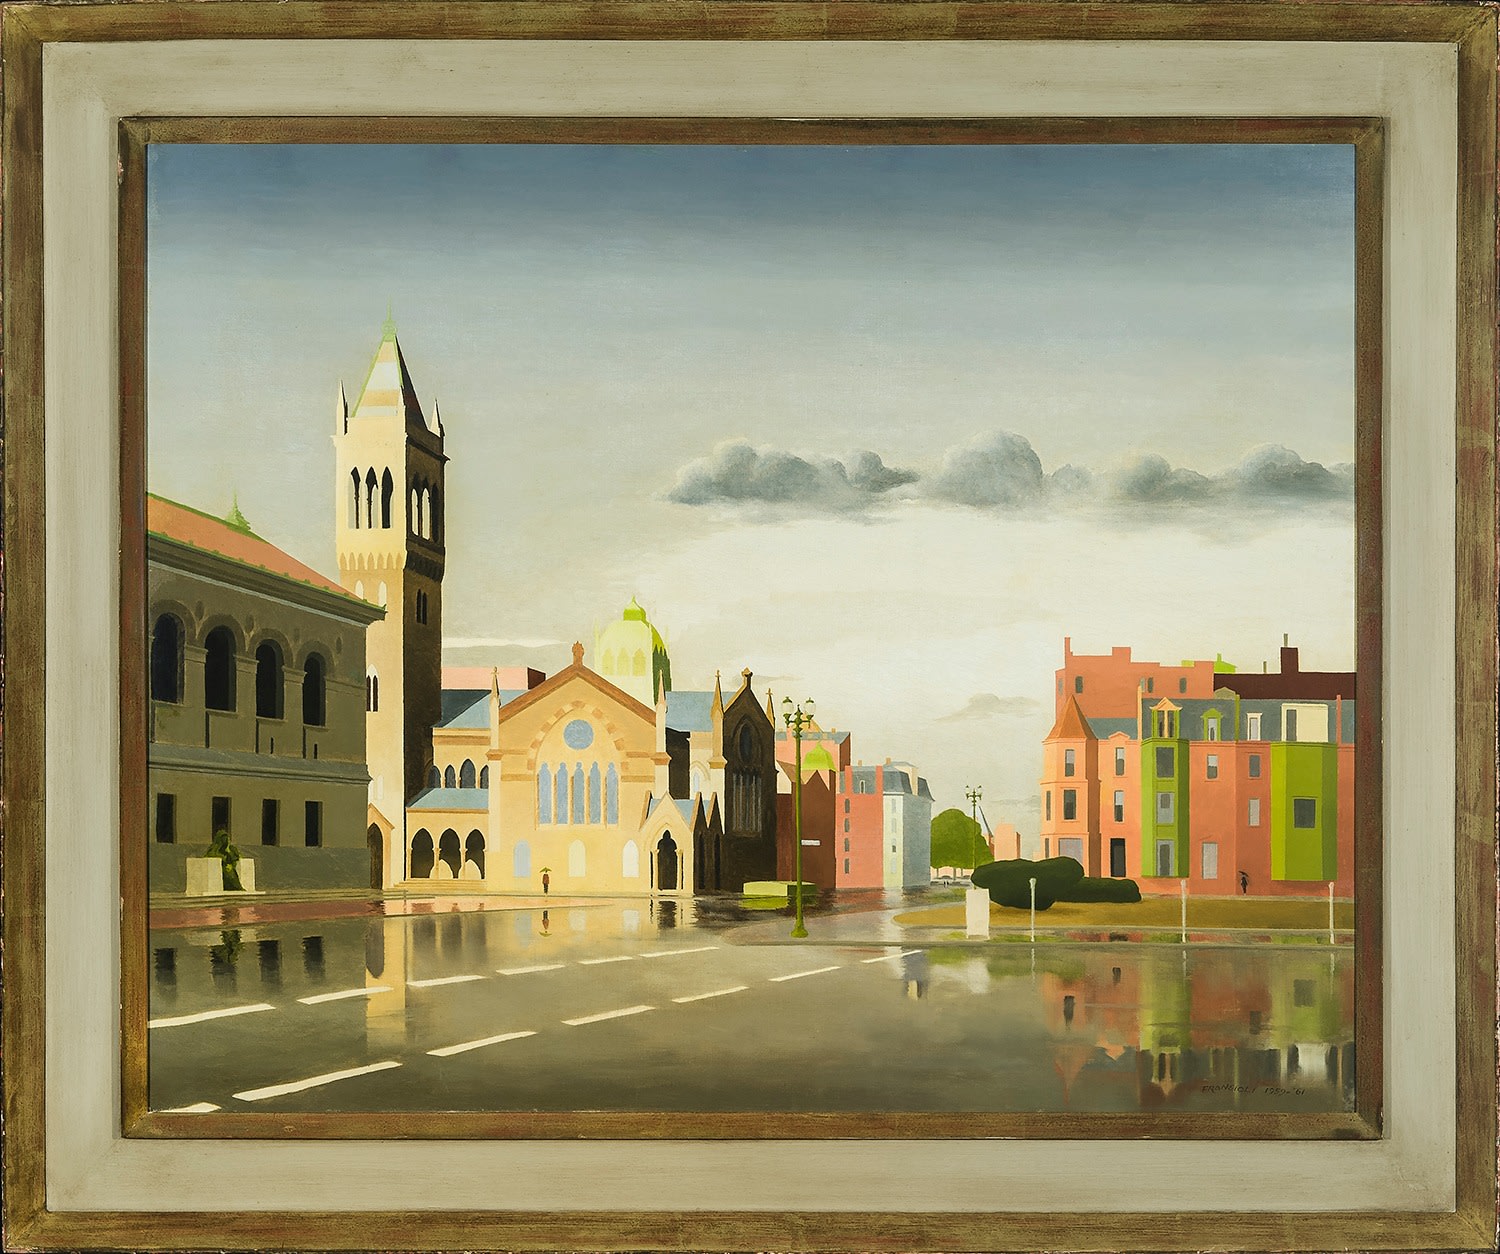 THOMAS FRANSIOLI (1906&ndash;1997). Copley Square, Boston, 1959&ndash;61. Oil on canvas, 24 x 30 in.